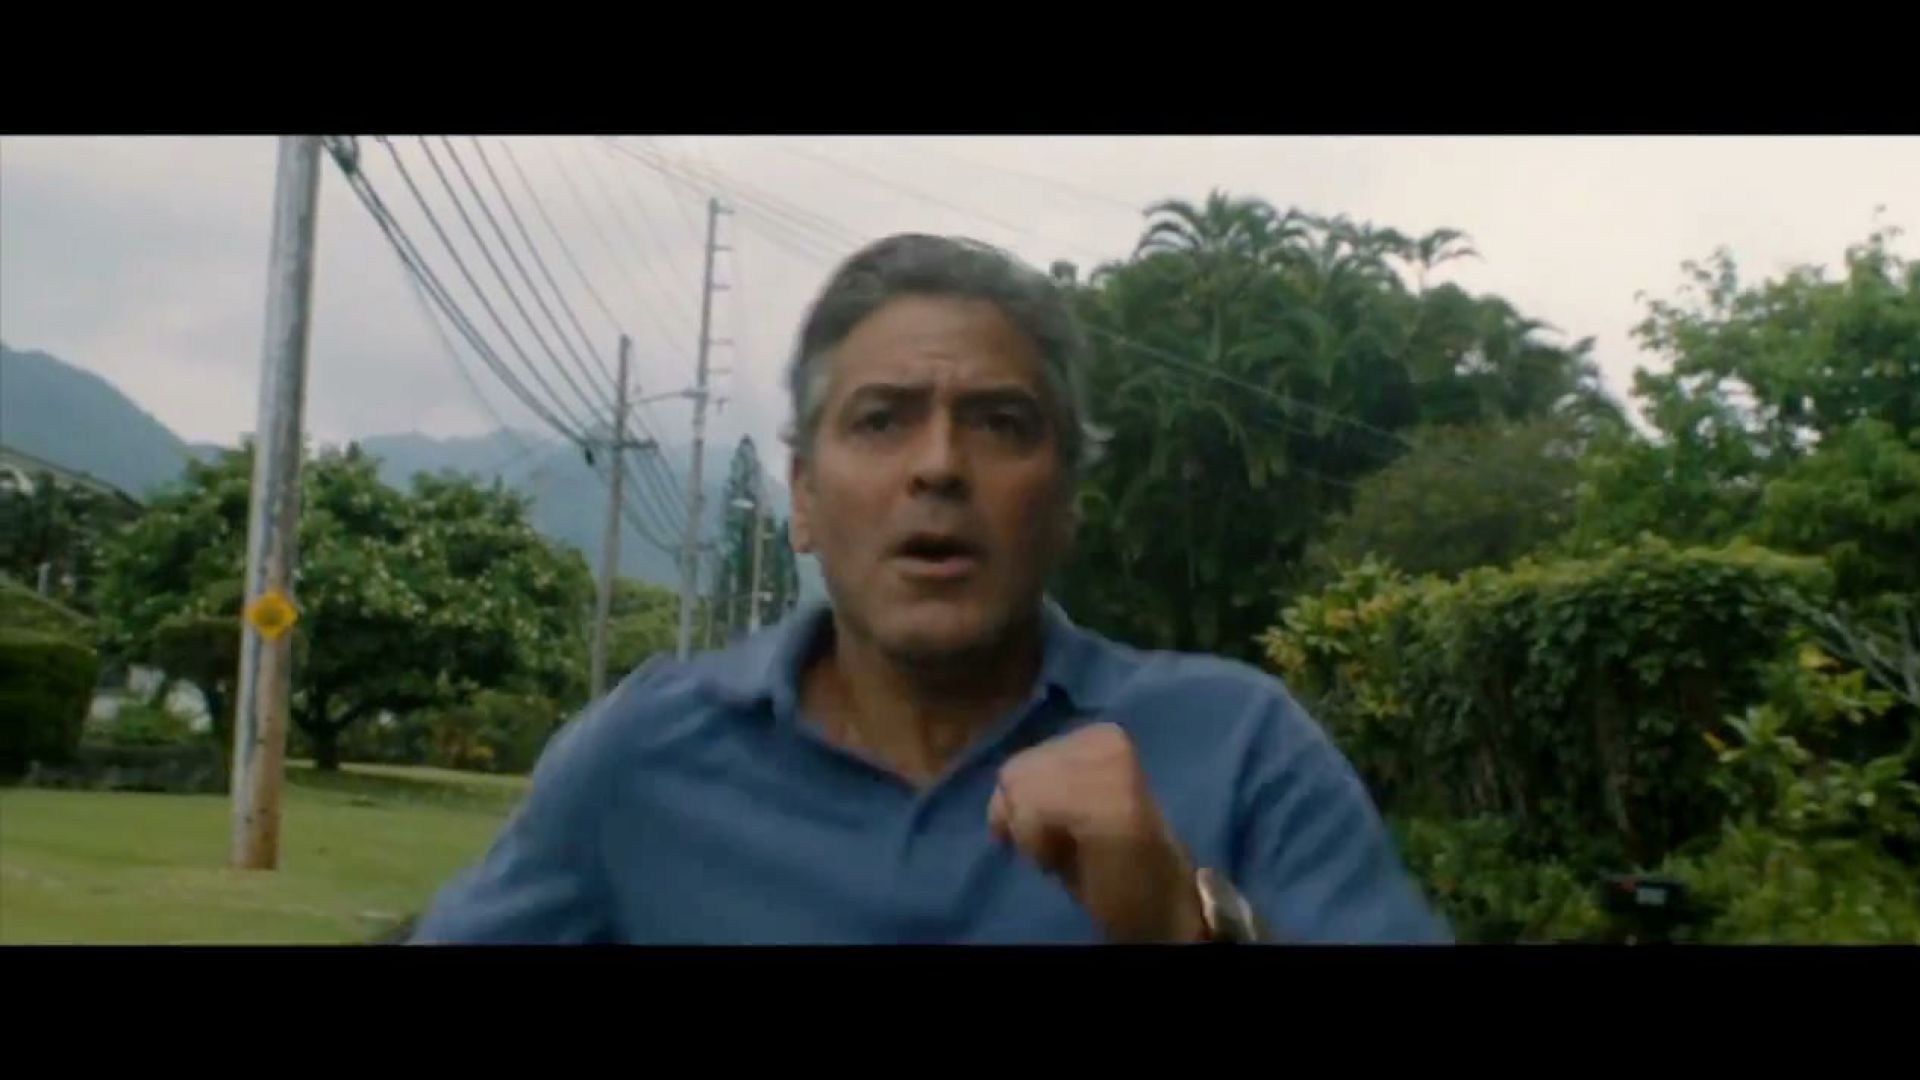 George Clooney runs in The Descendants